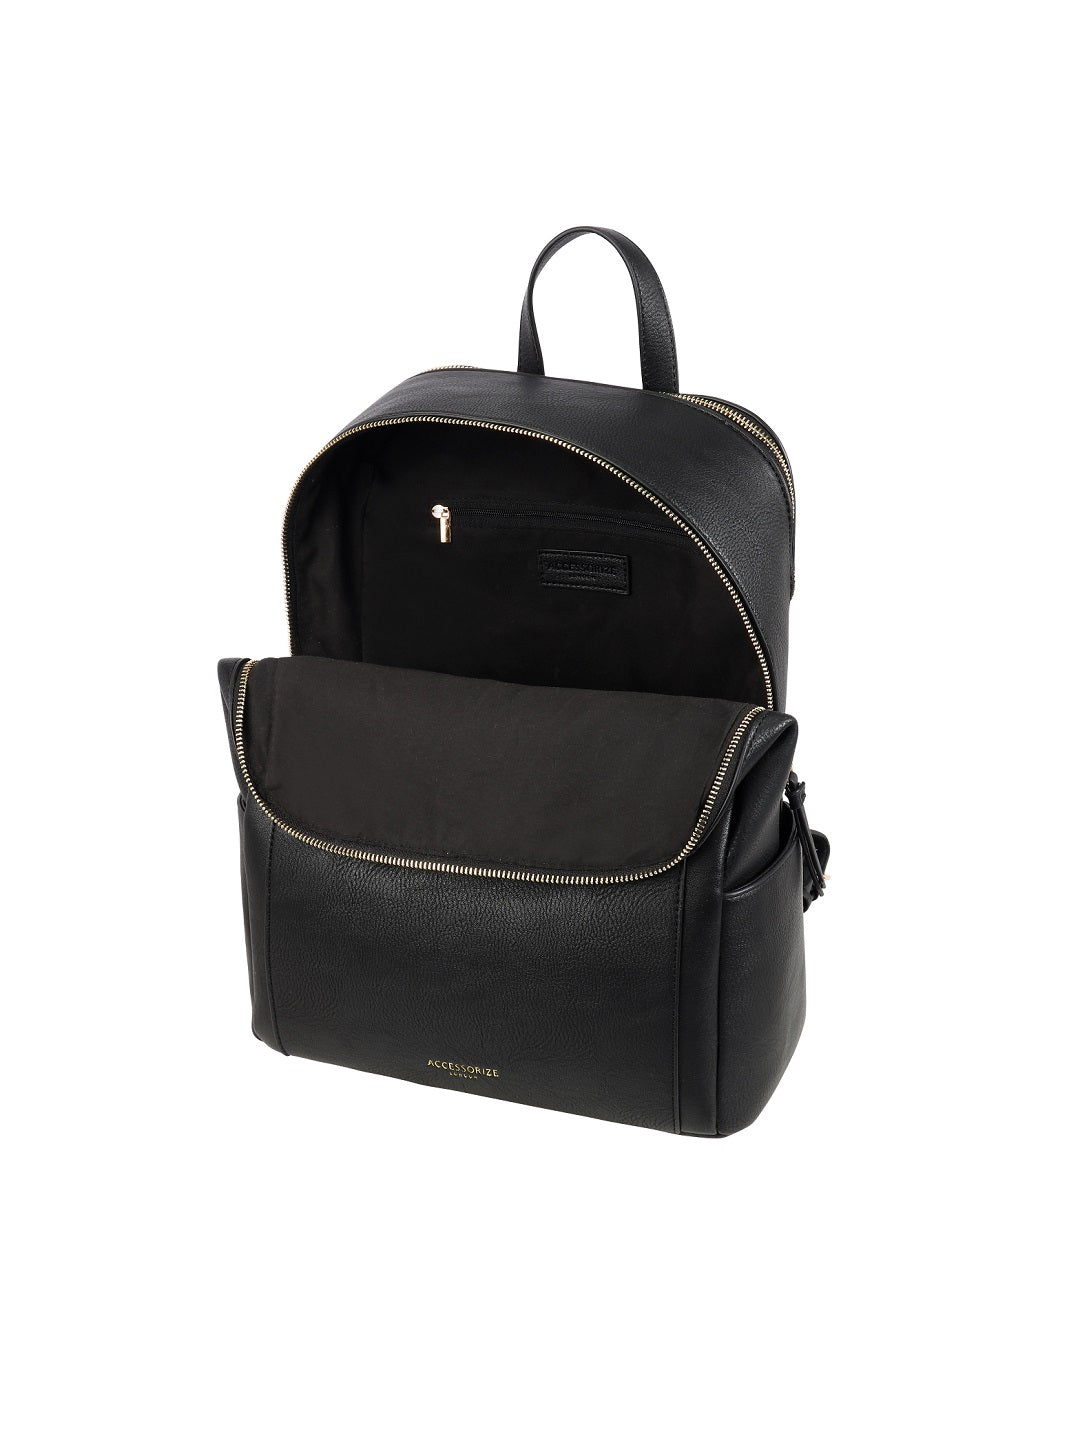 INSTOCK Kate Spade Chelsea Medium Backpack in Black, Women's Fashion, Bags  & Wallets, Backpacks on Carousell